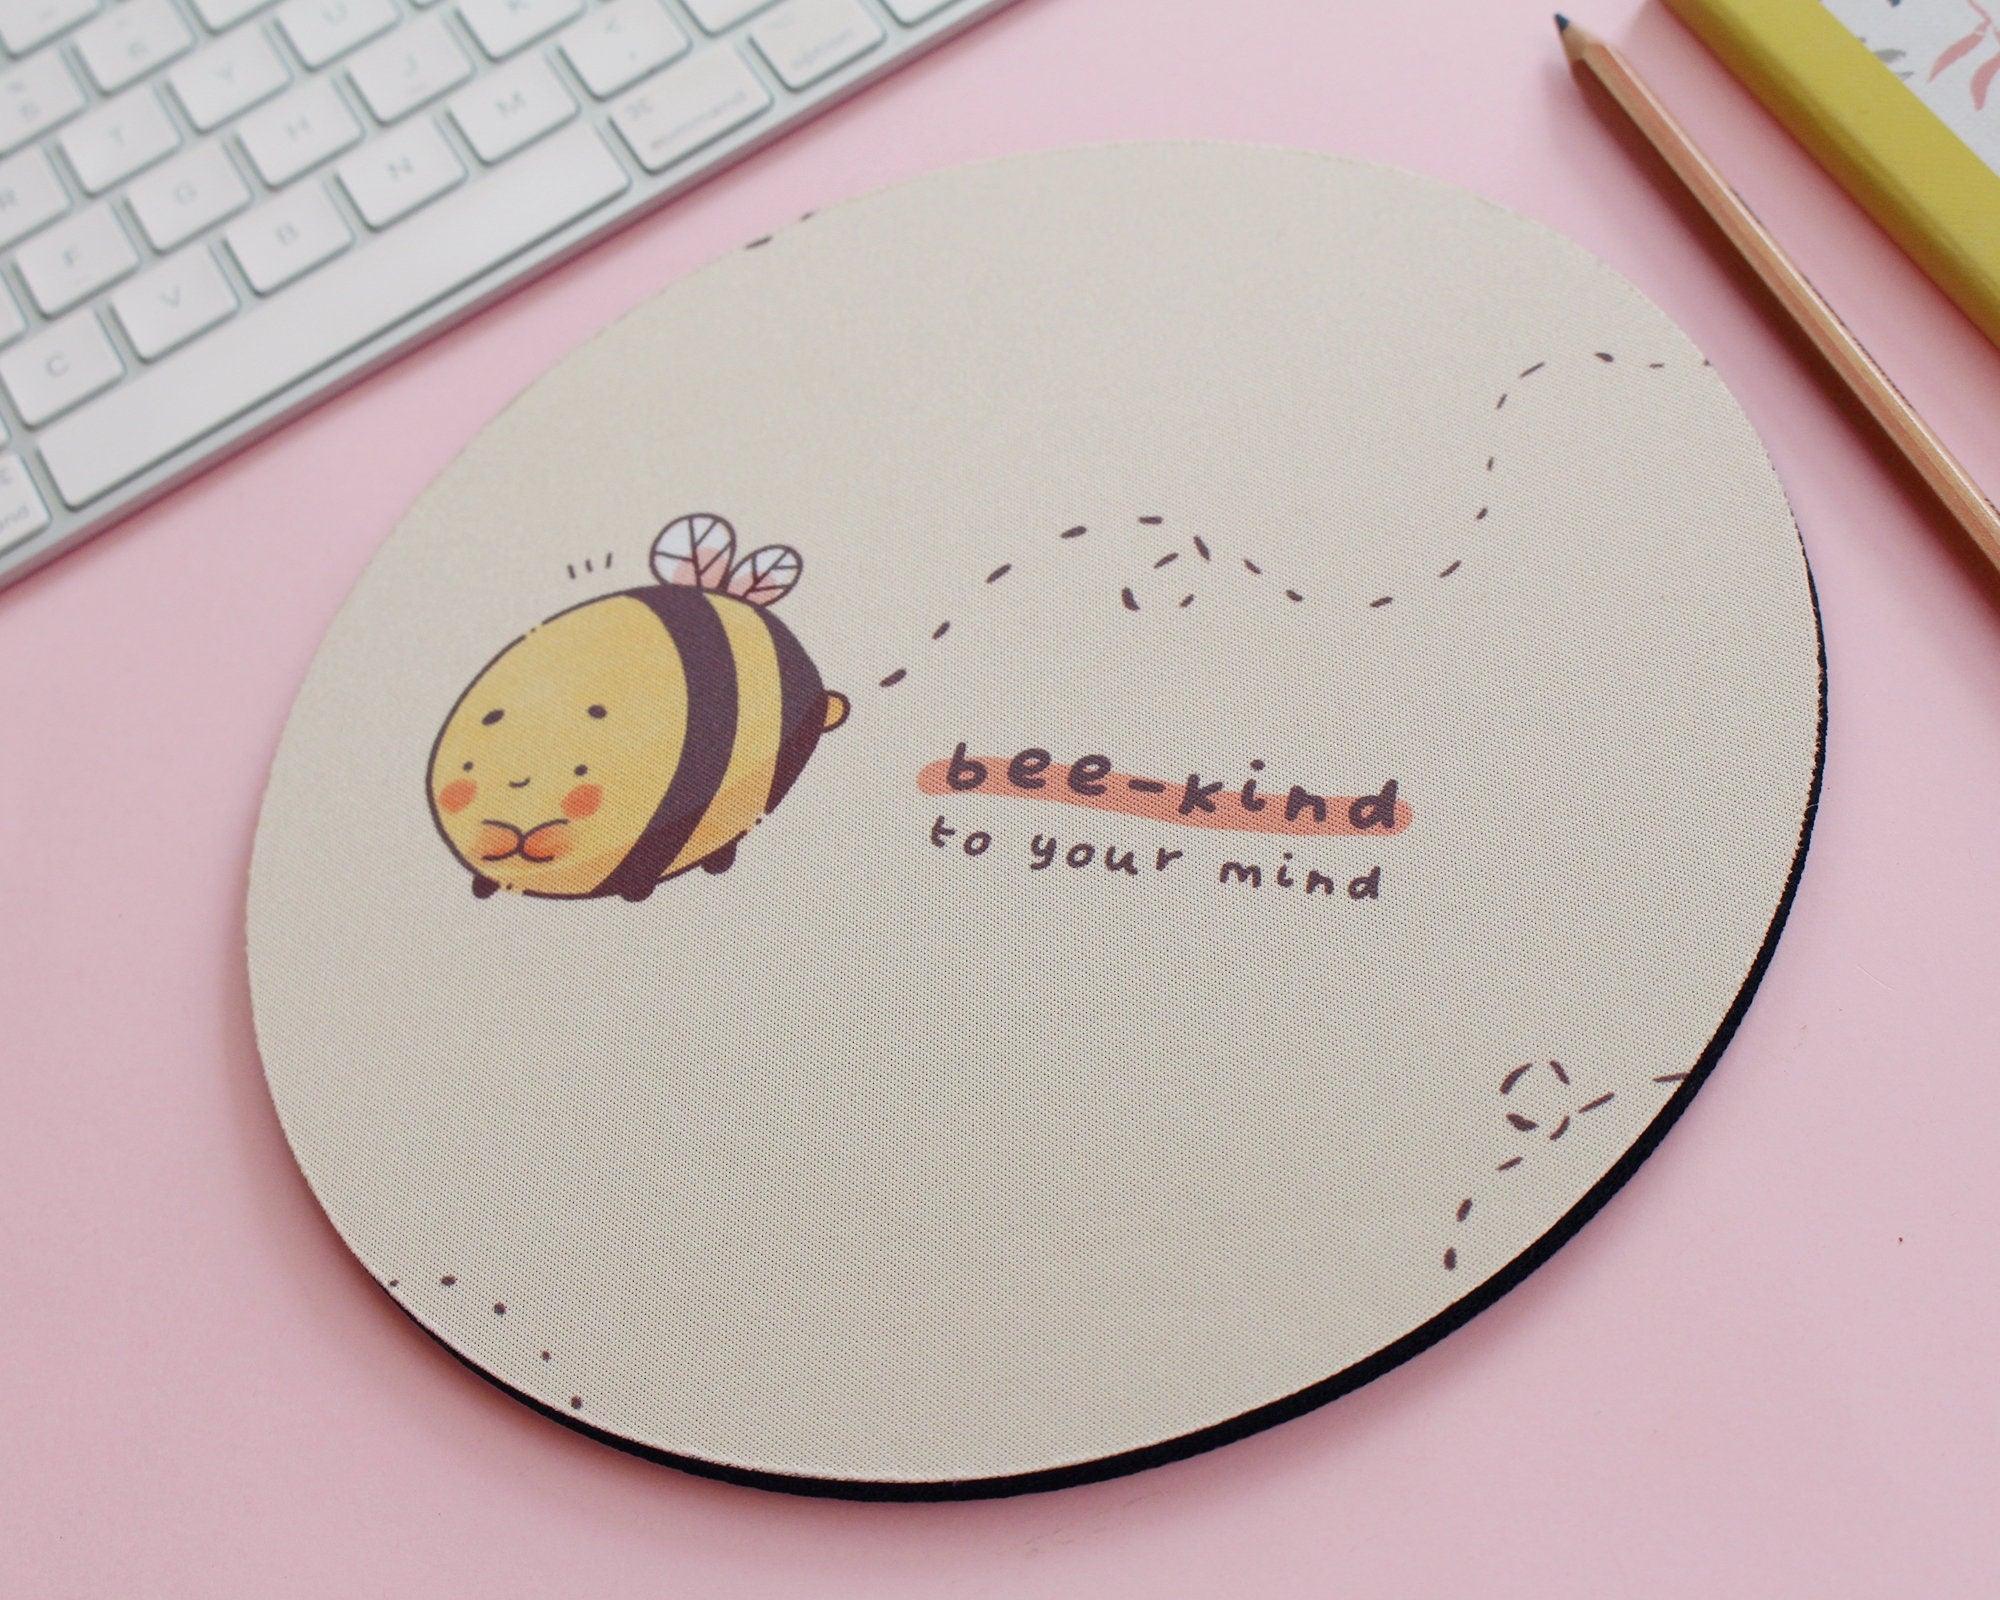 Kawaii Bumblebutt Mouse Mat - Hand-printed original design to brighten up your workspace. 2